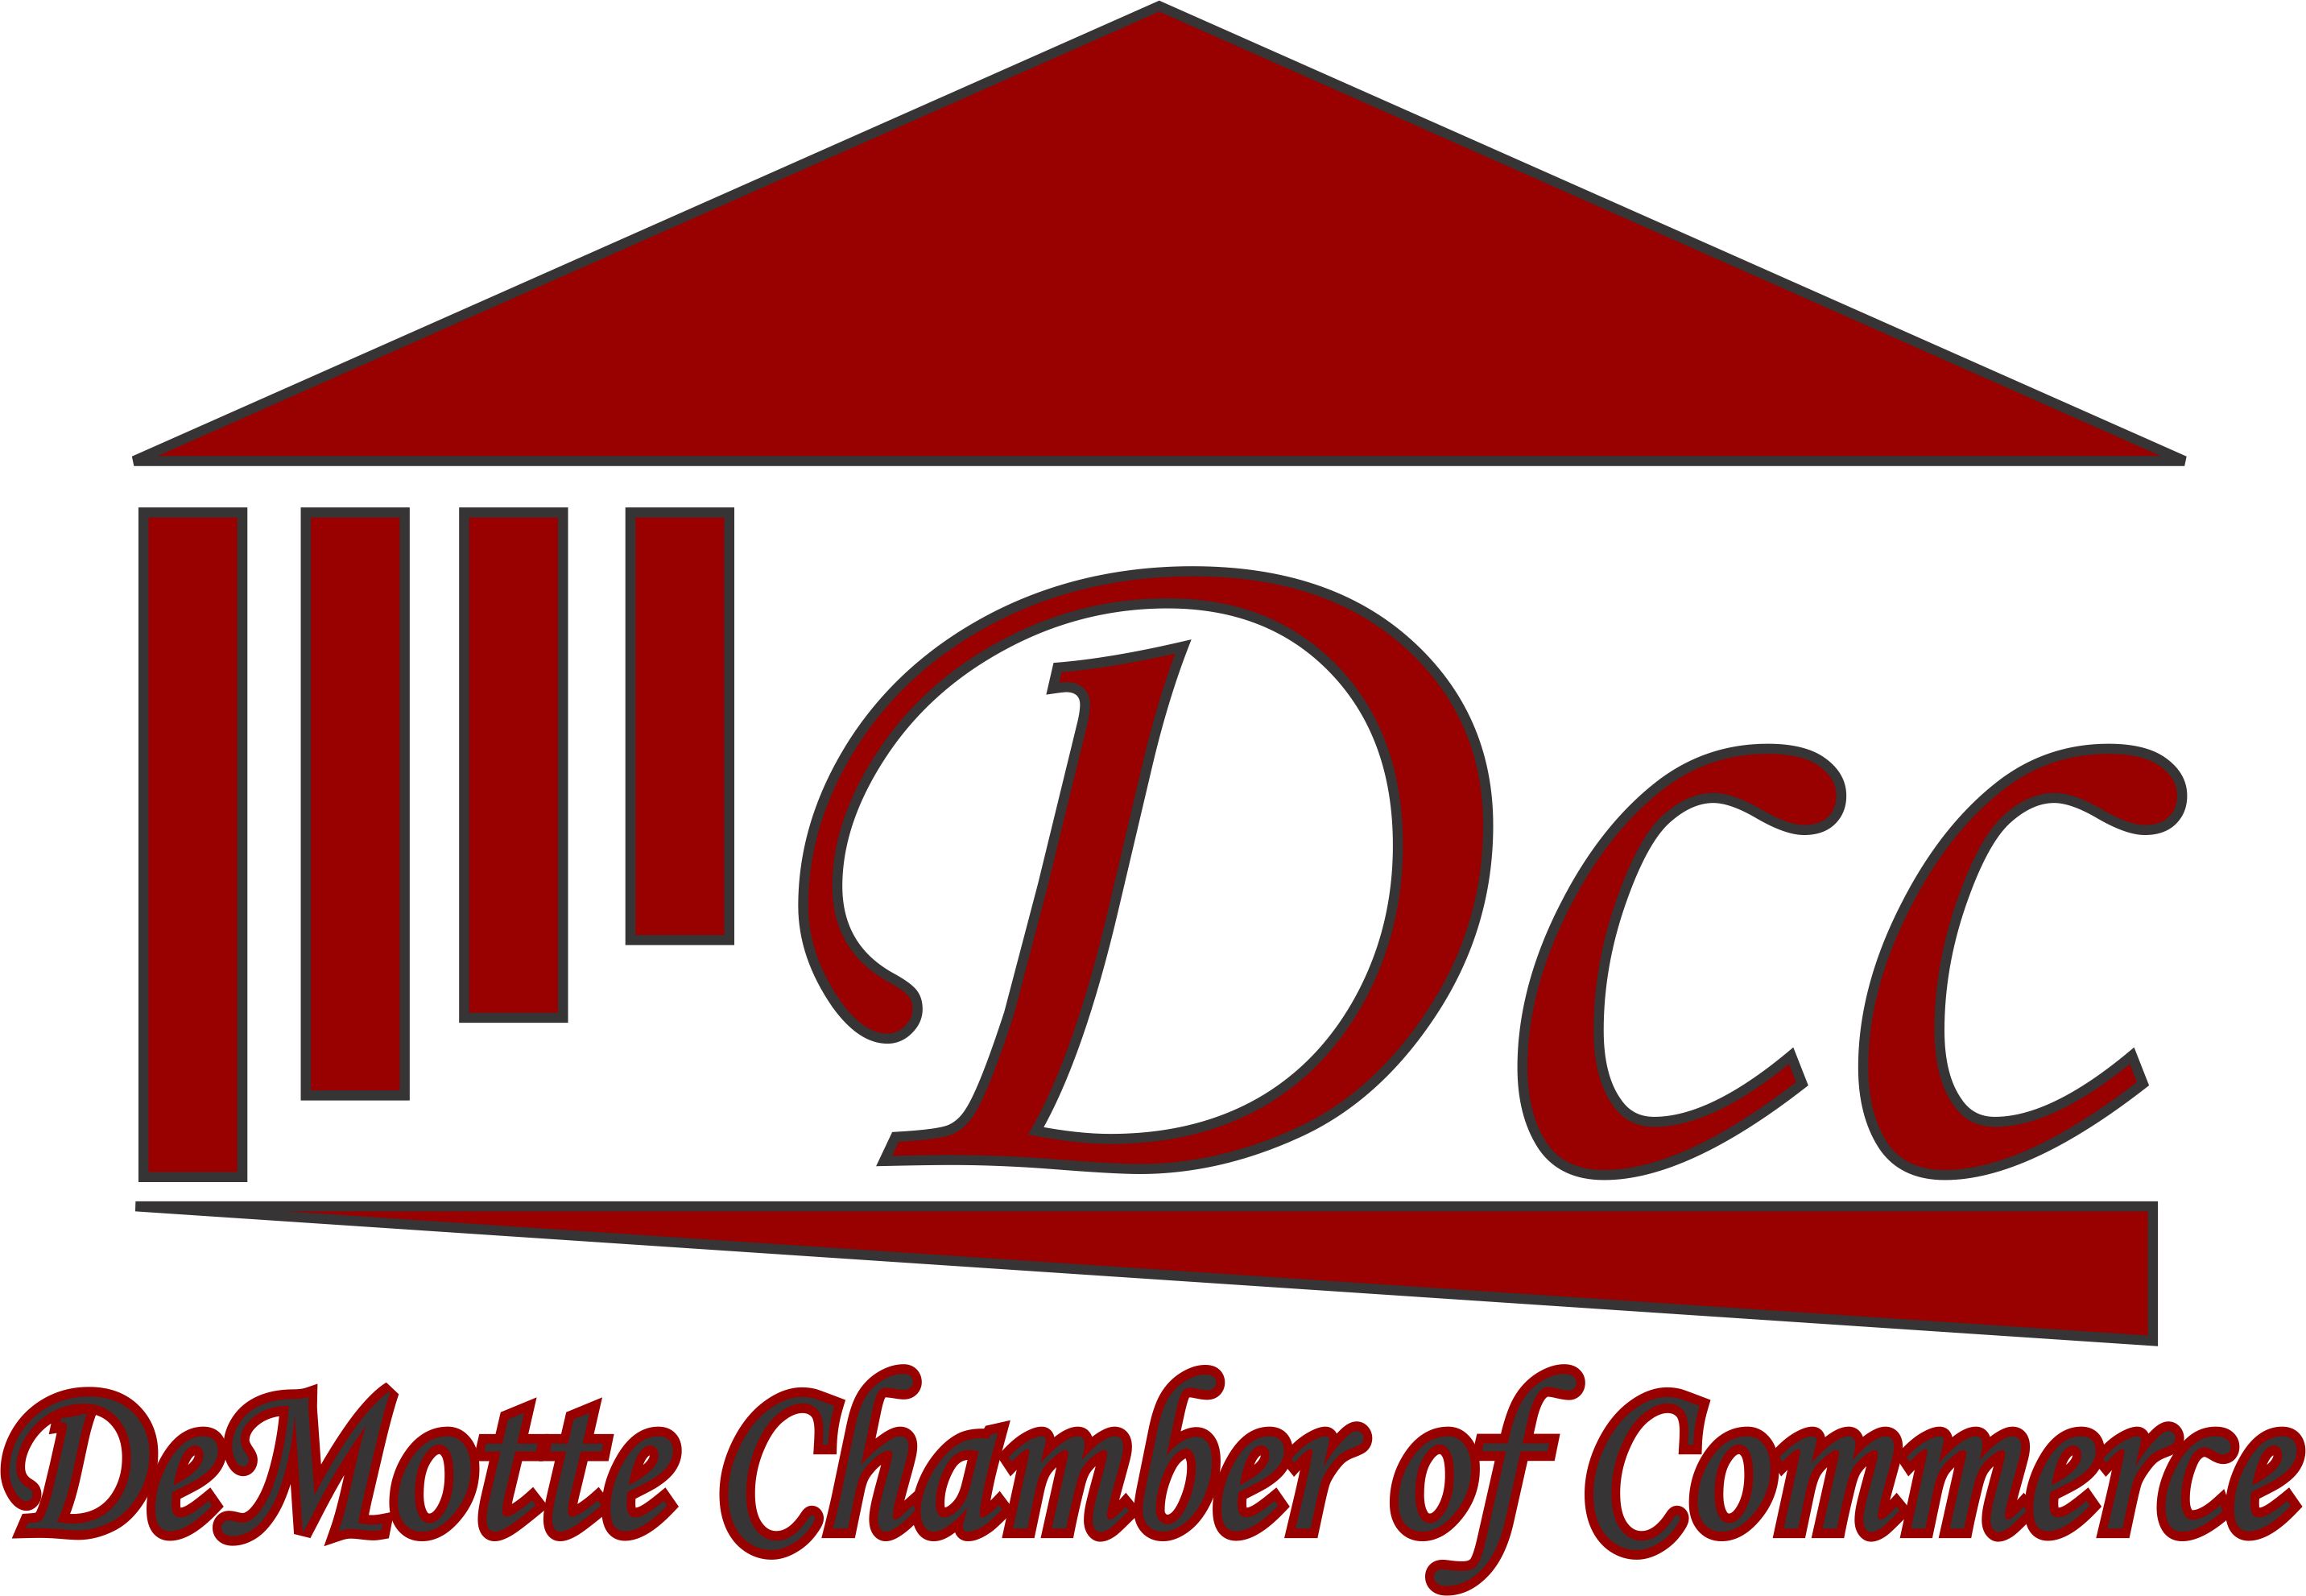 DeMotte Chamber of Commerce